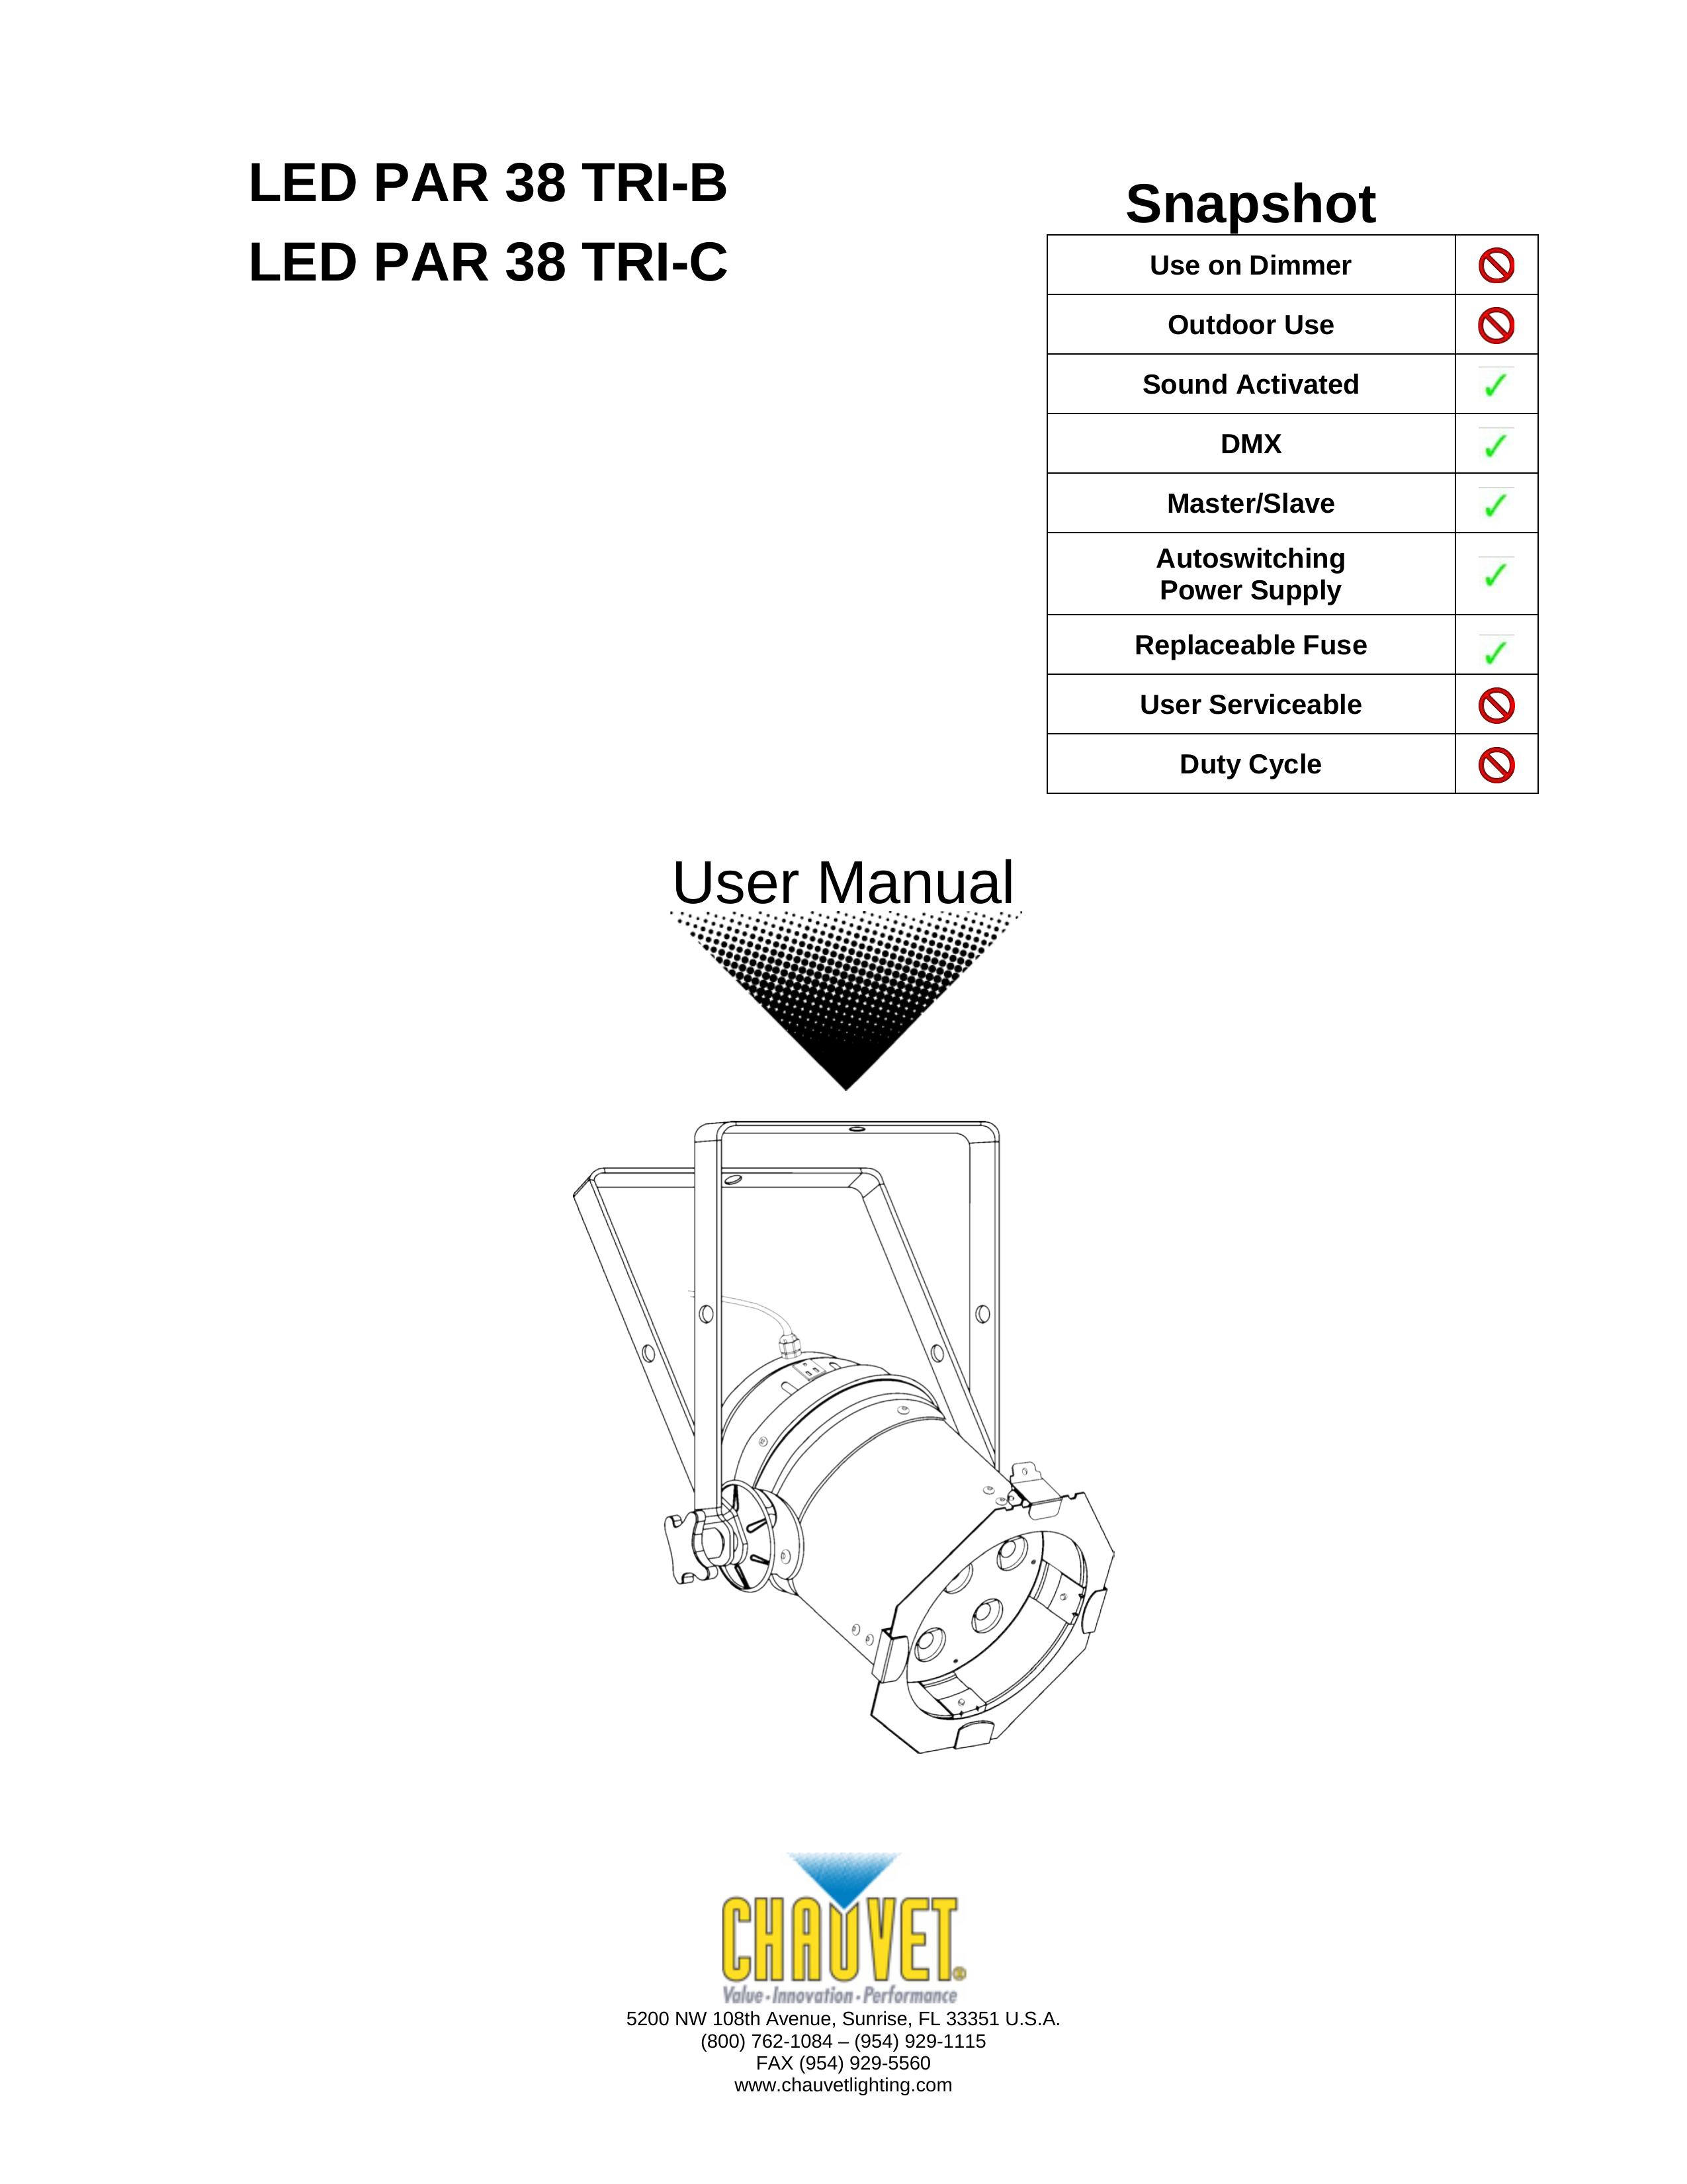 Chauvet led par 38 tri-c Landscape Lighting User Manual